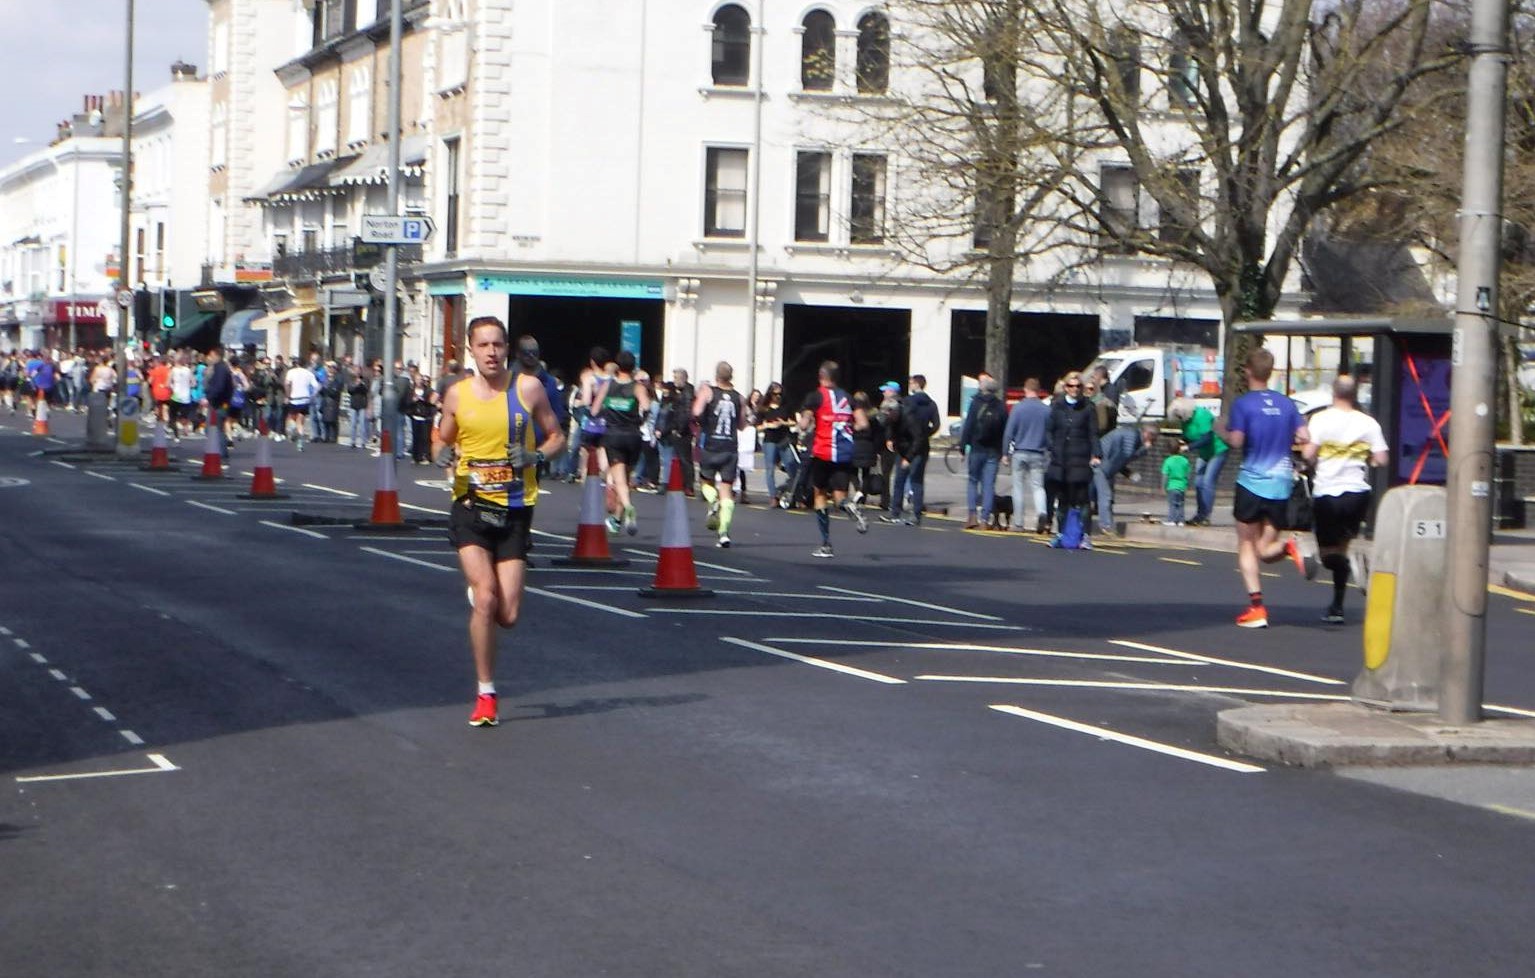 Stu Nicholas races along in the Brighton Marathon